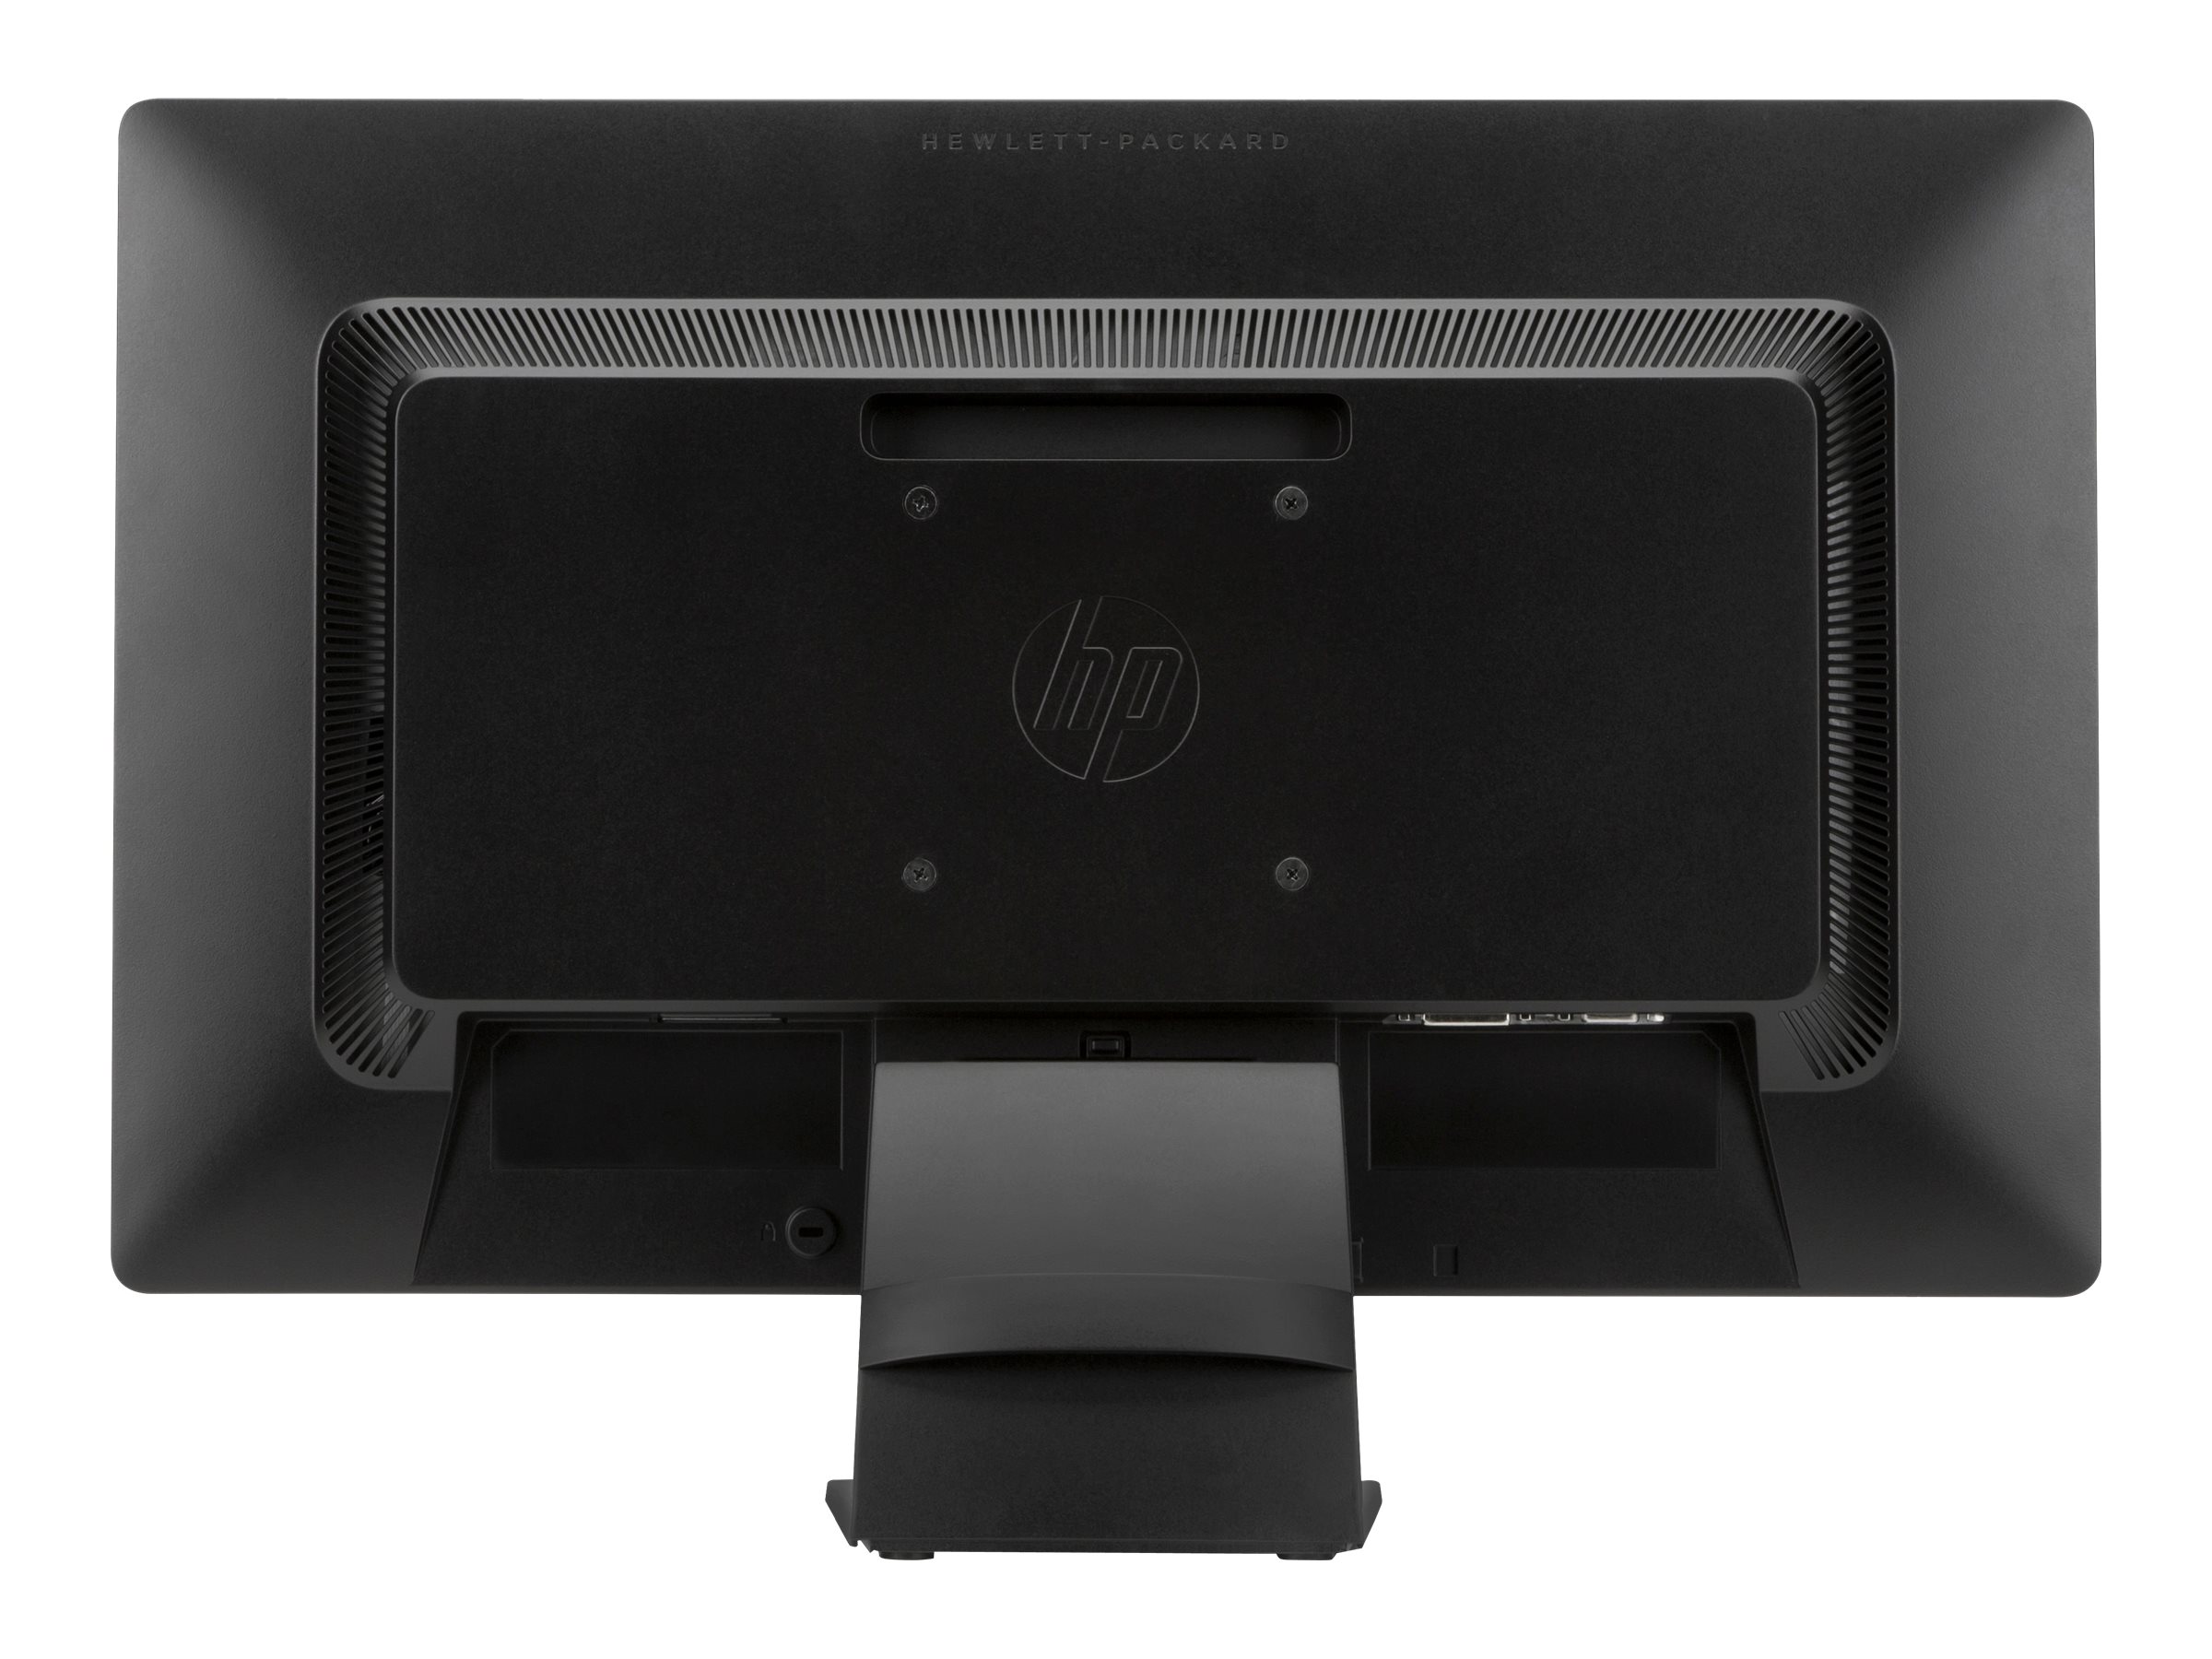 HP ProDisplay P231 - LED monitor | www.shi.com